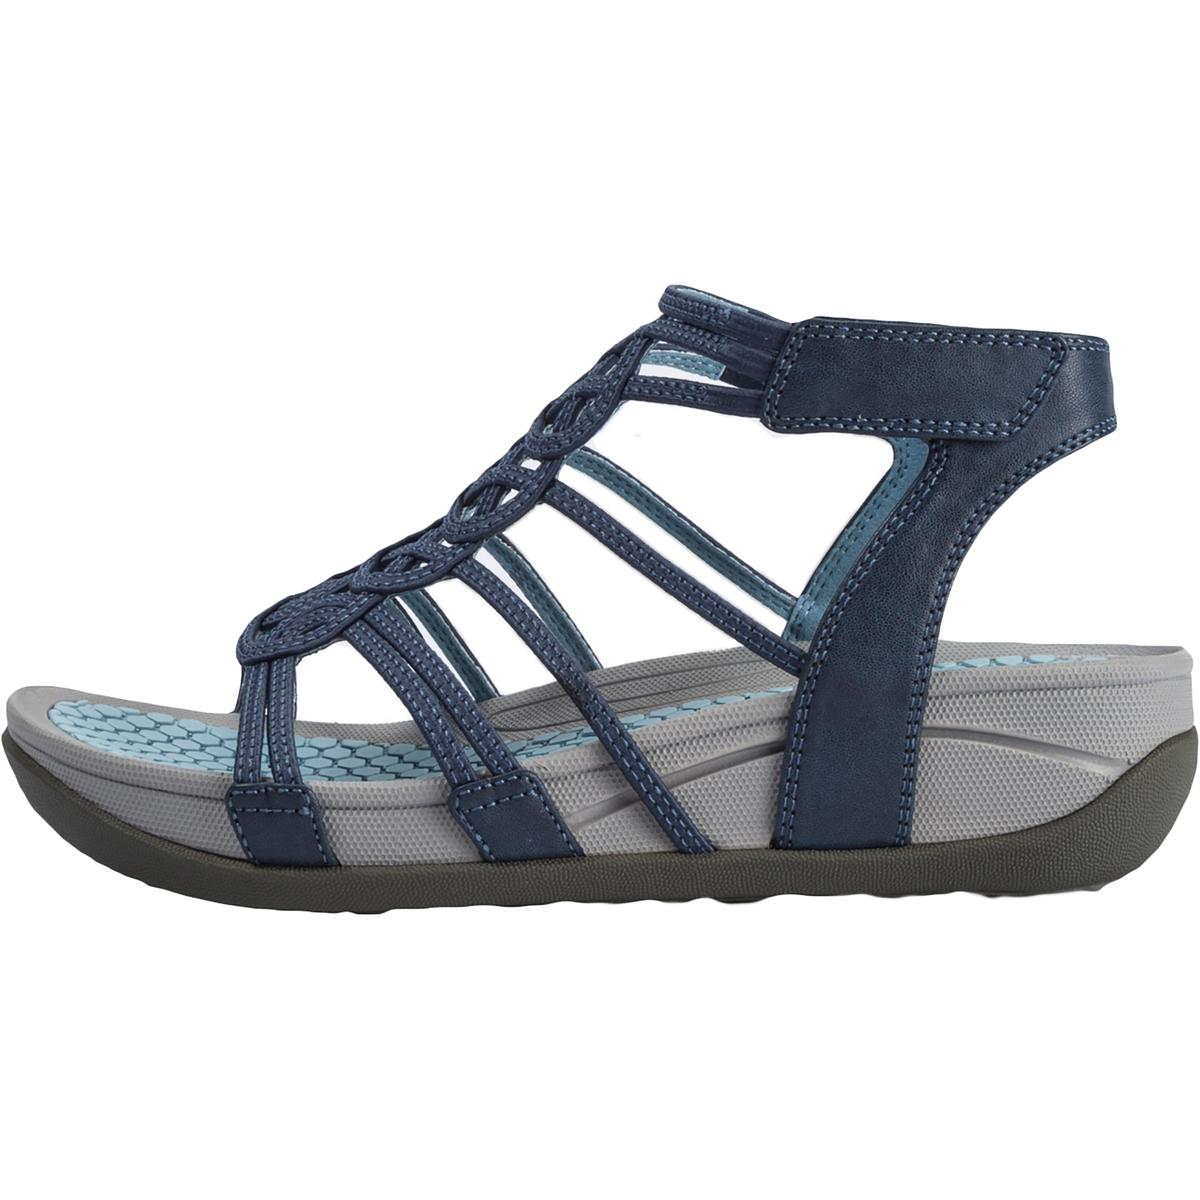 Baretraps Womens Delly Navy Sport Sandals Shoes 7.5 Medium (B,M) BHFO ...